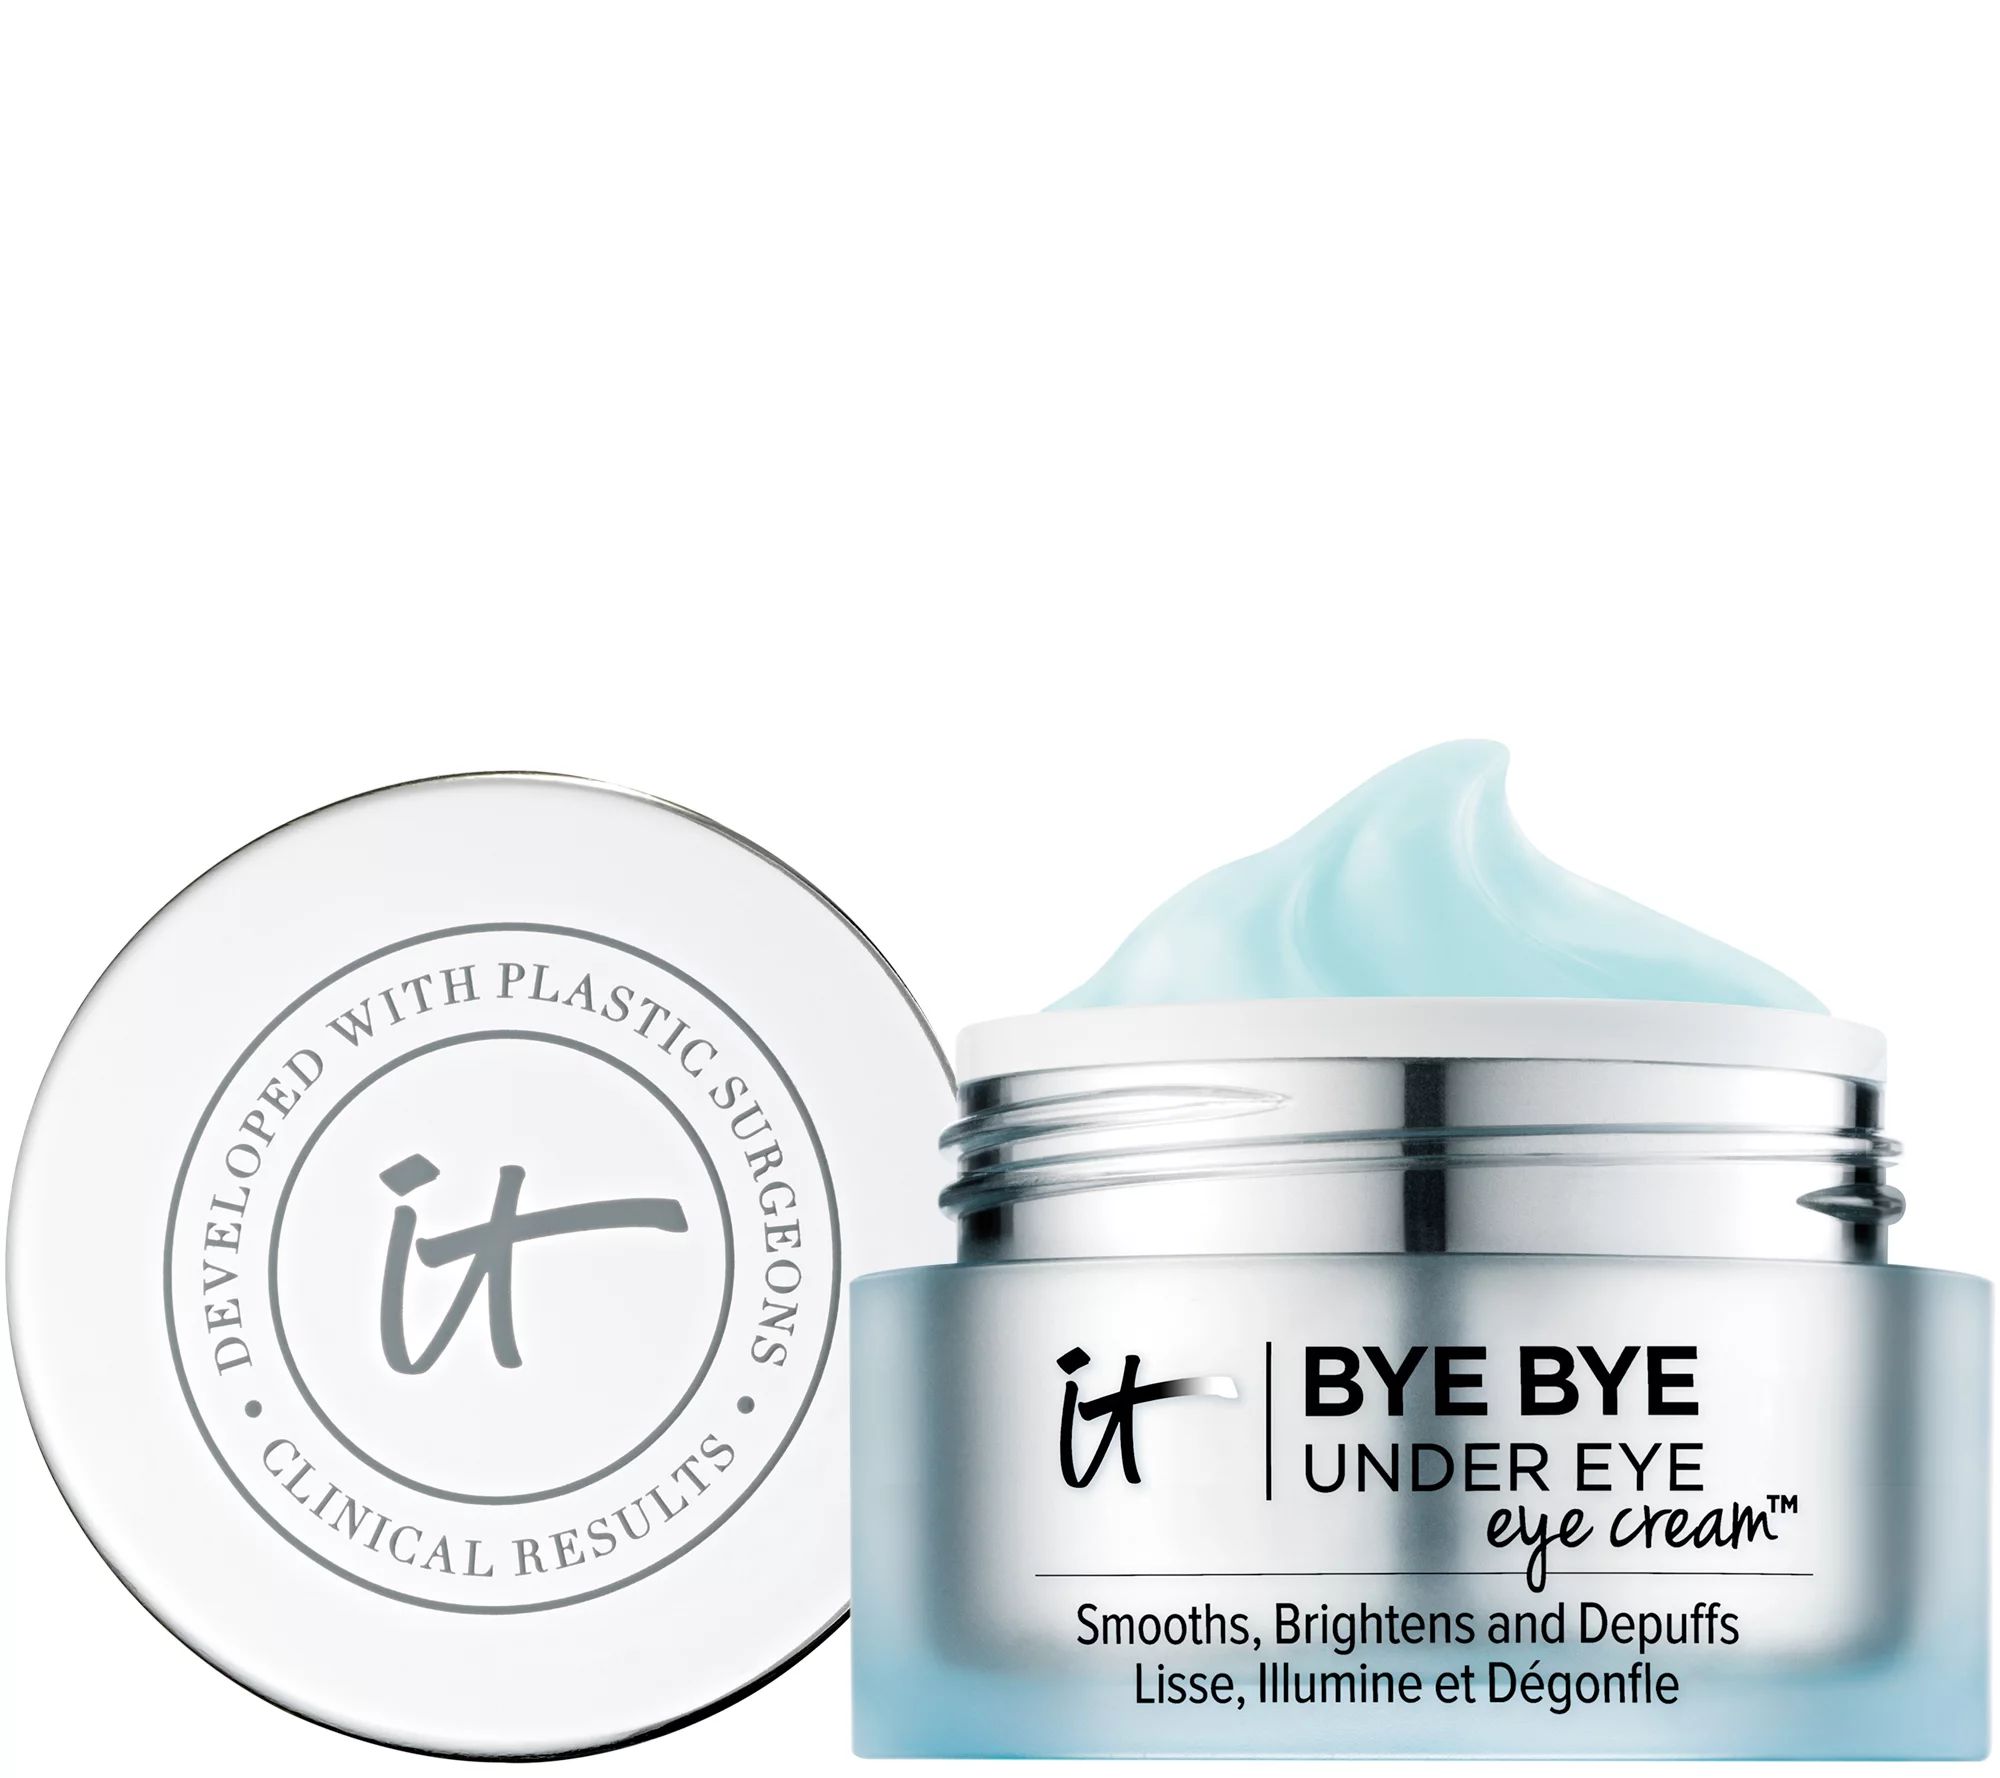 IT Cosmetics Bye Bye Under Eye Anti-Aging Treatment Eye Cream | QVC